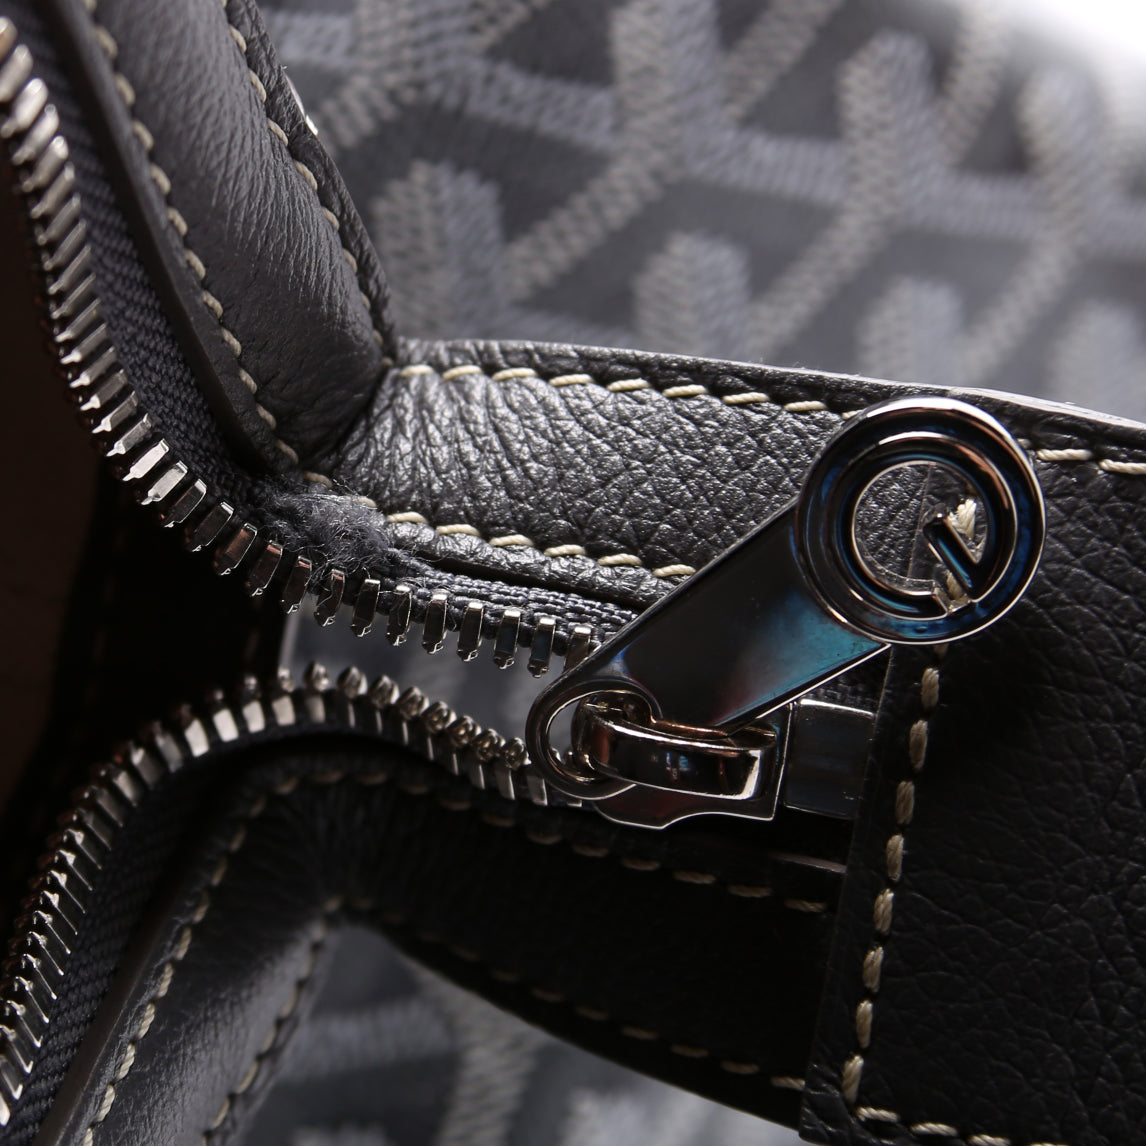 Goyard Black 'Cisalpin' Backpack